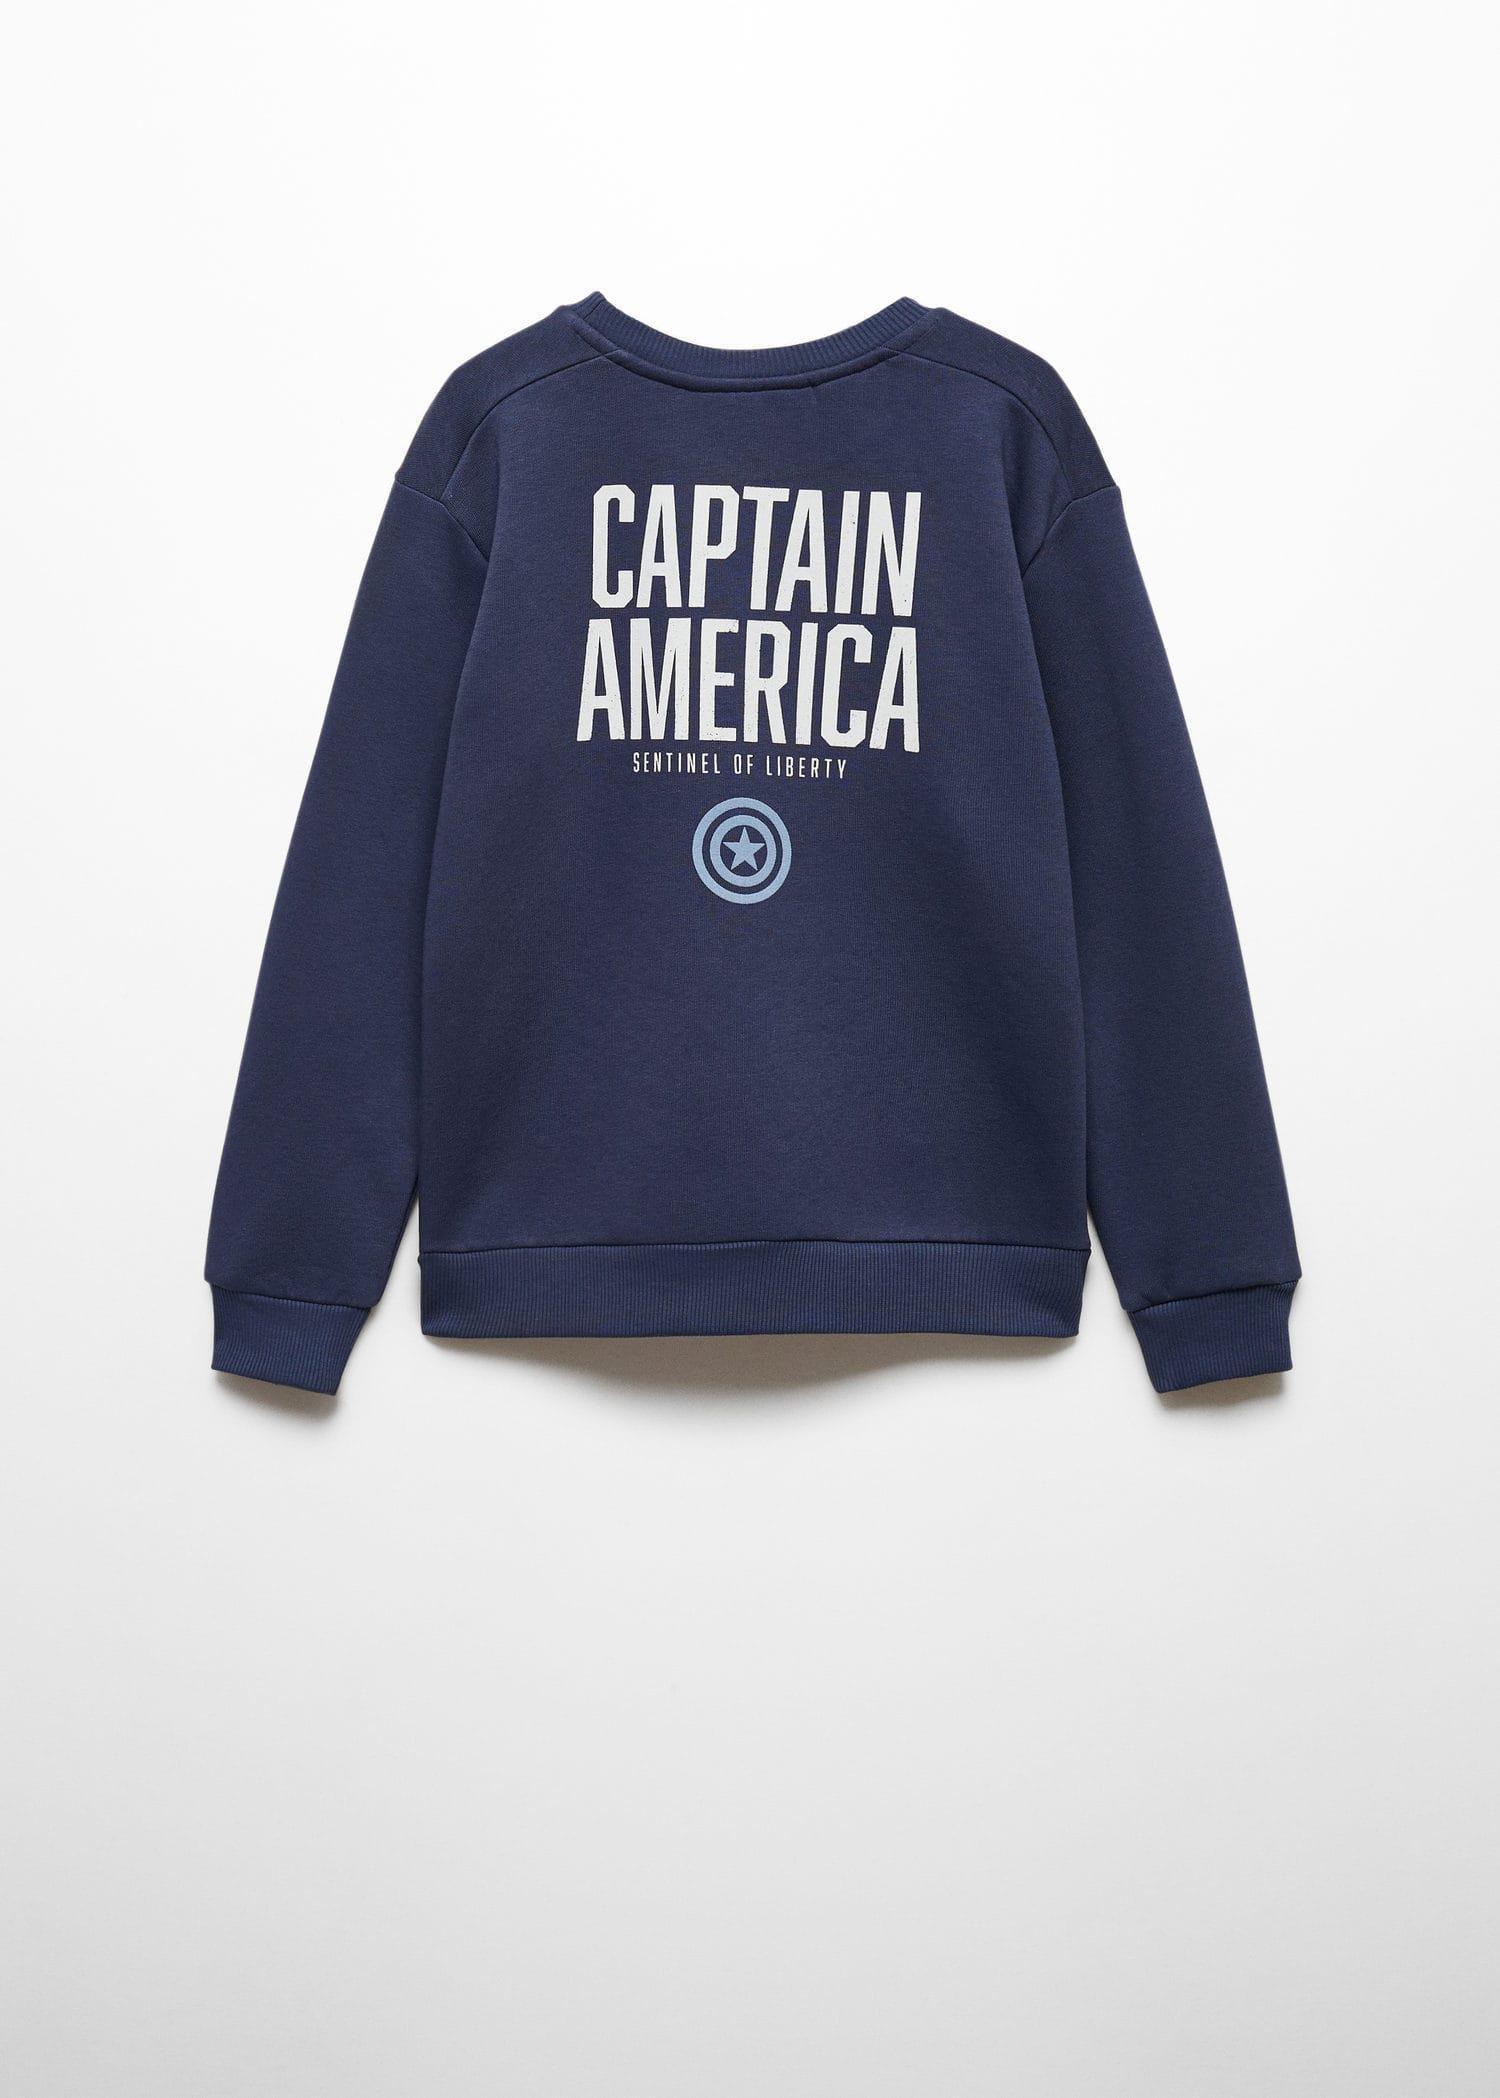 Mango - Navy Captain America Sweatshirt, Kids Boys